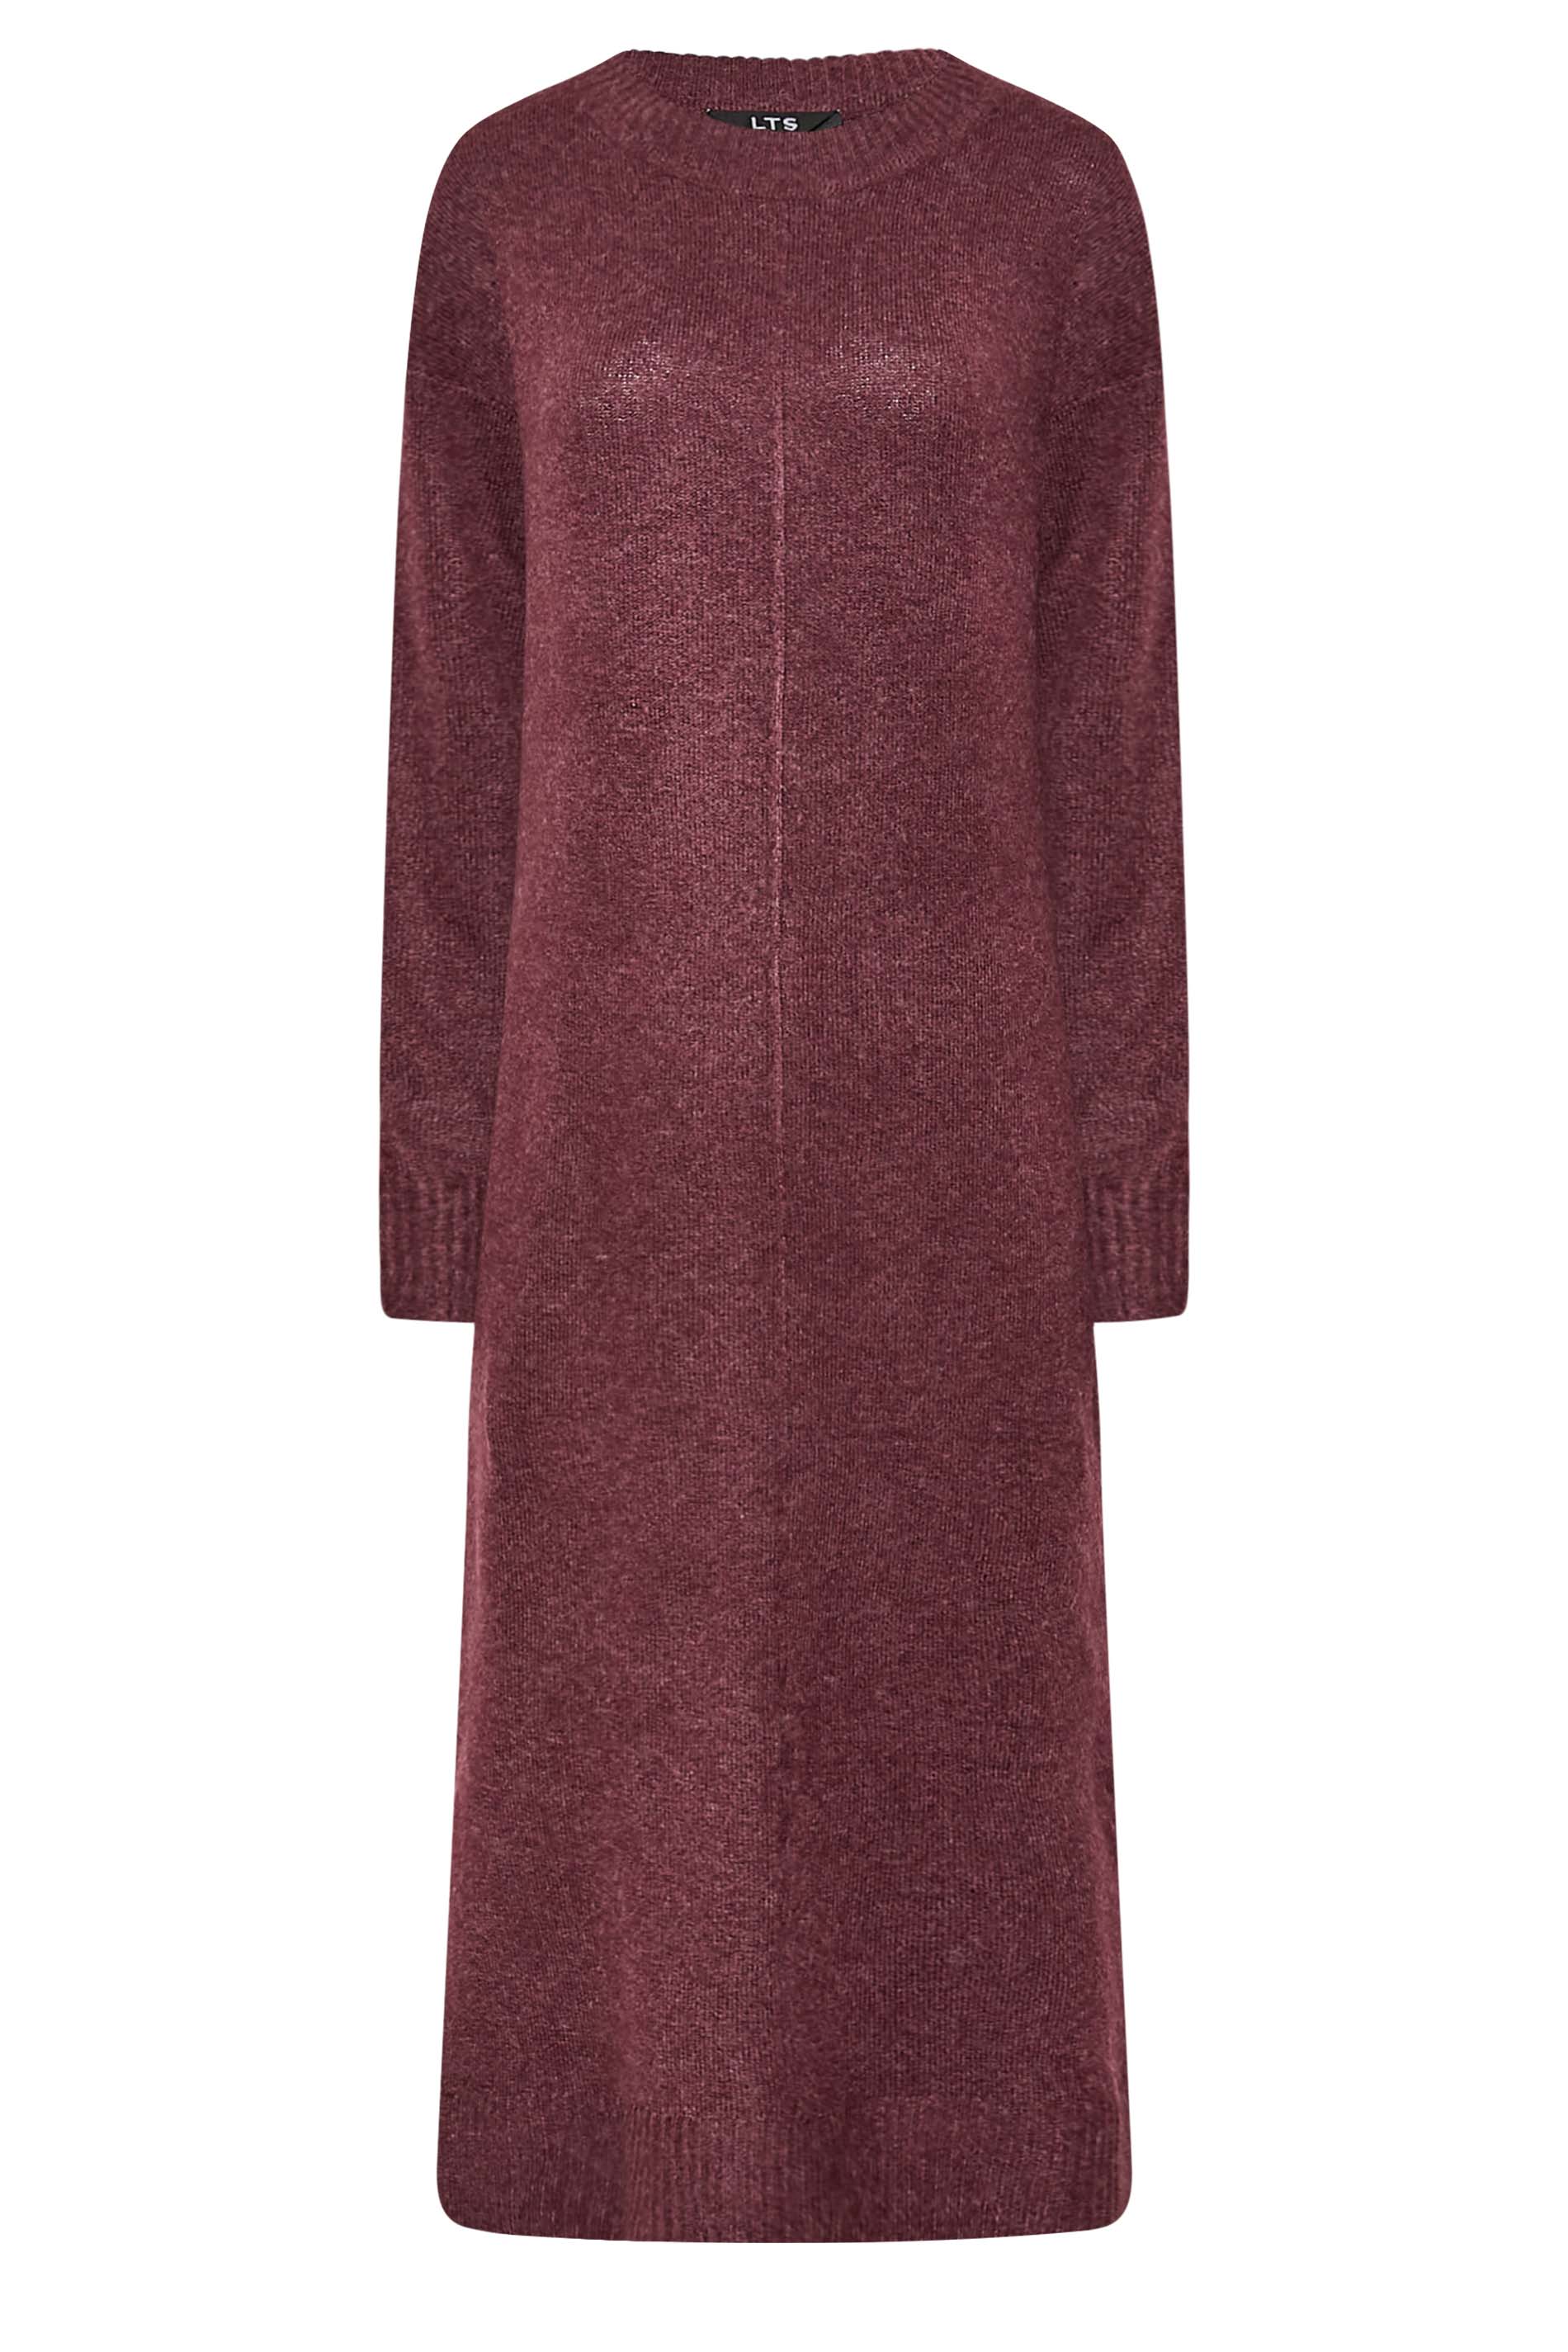 LTS Tall Women's Burgundy Red Knitted Midi Dress | Long Tall Sally  2